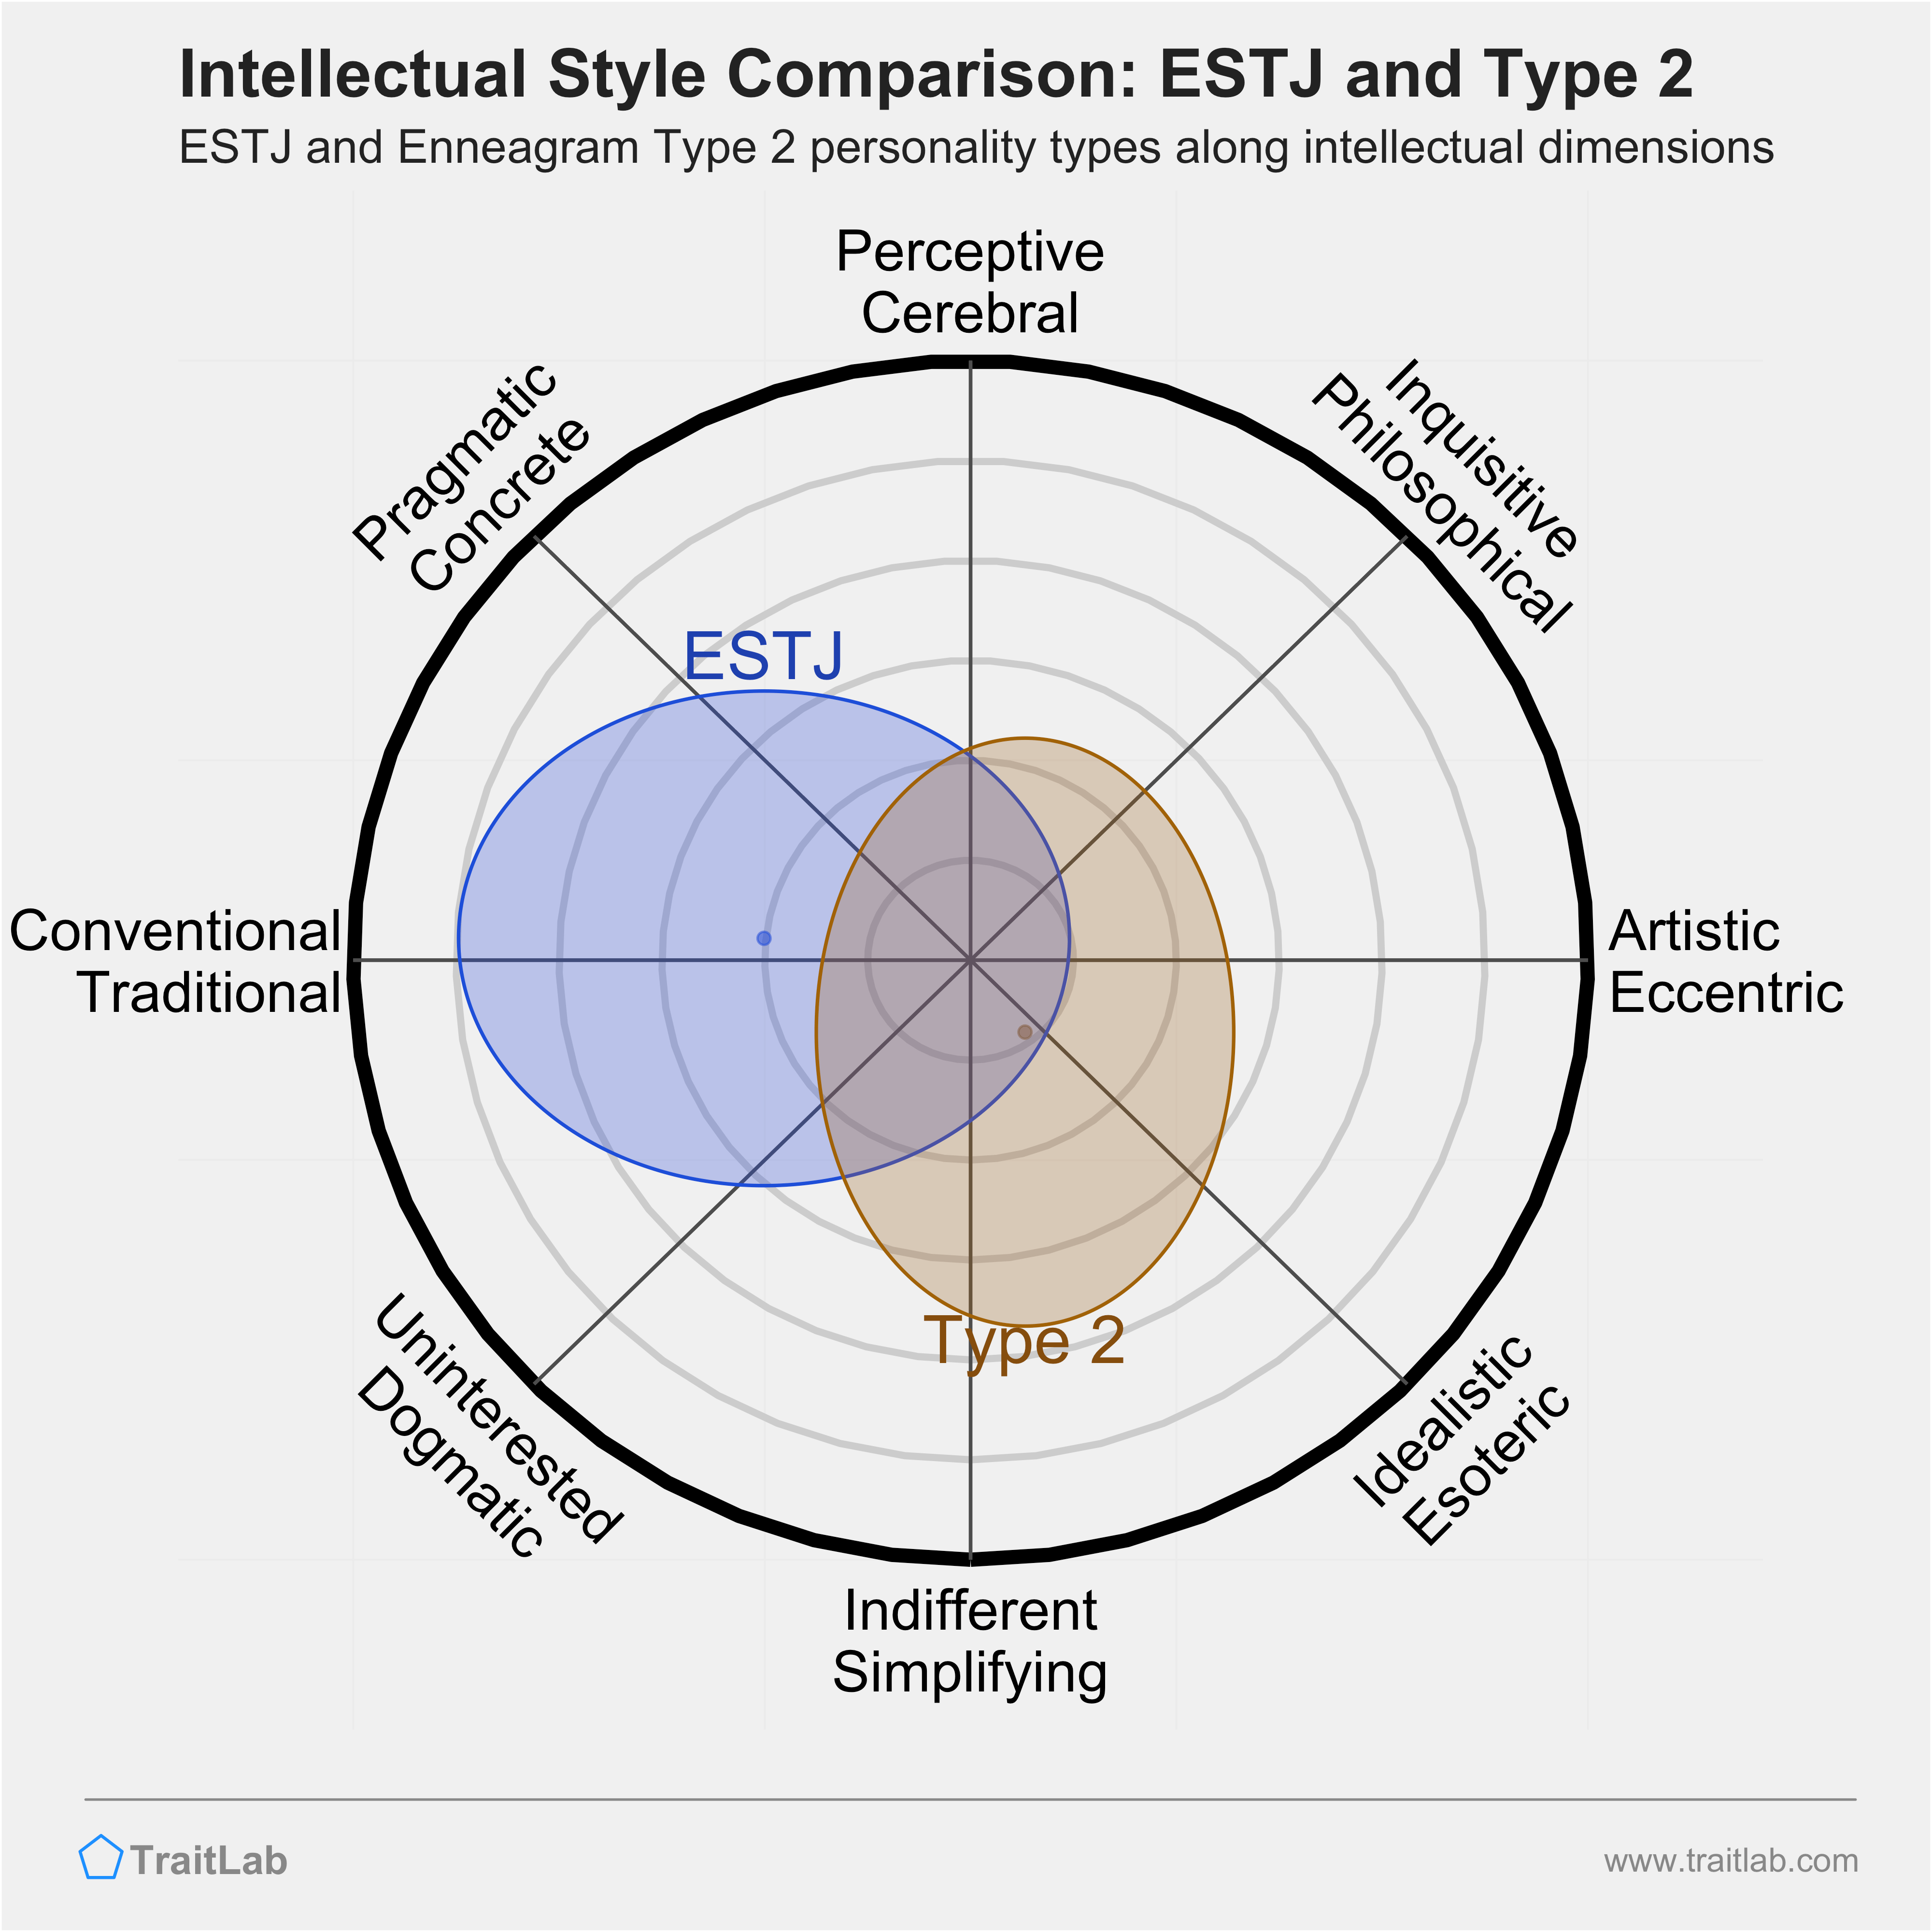 ESTJ and Type 2 comparison across intellectual dimensions